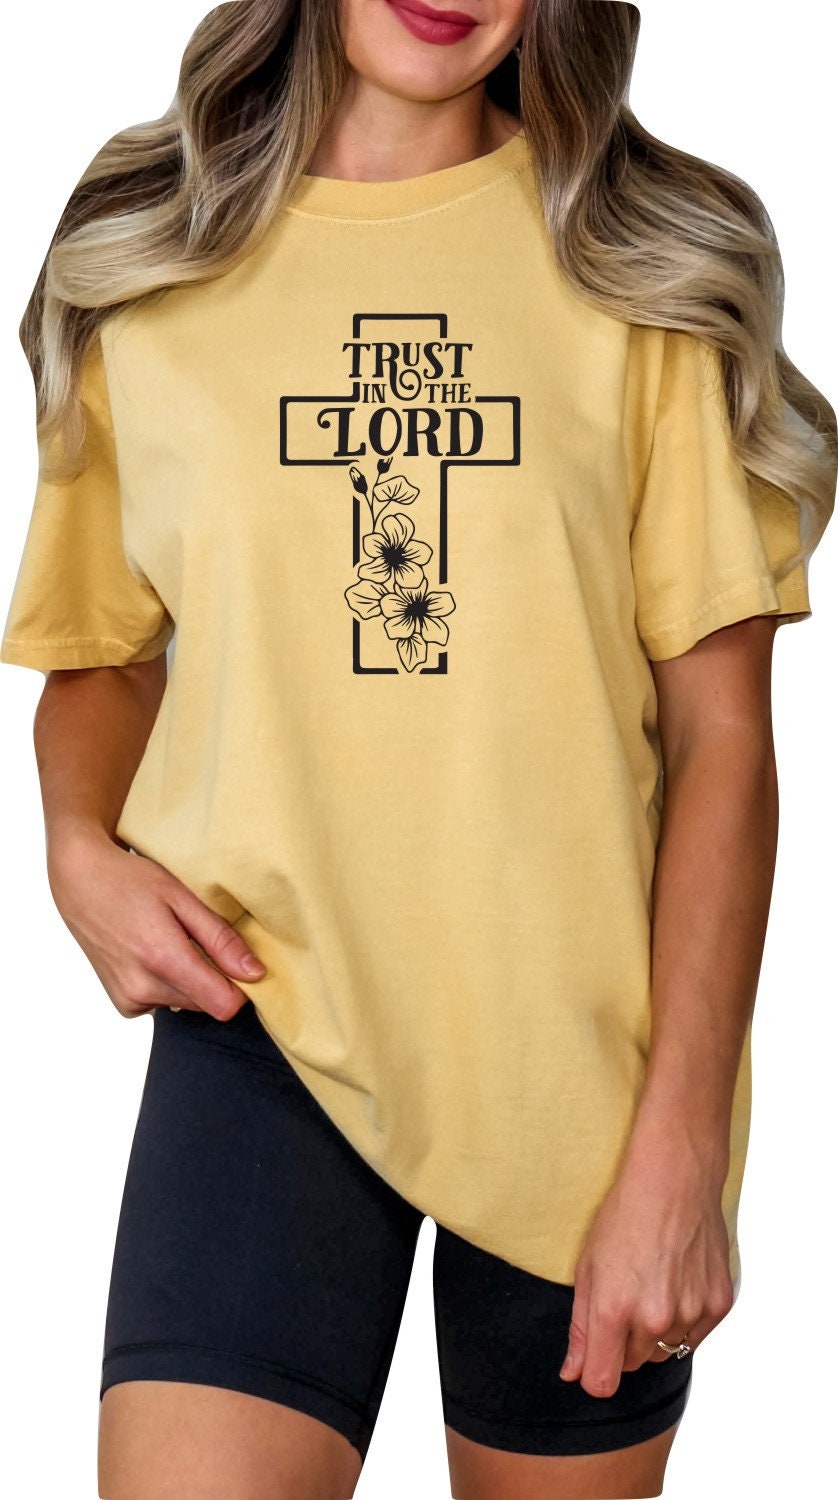 Christian Shirts Boho Christian Shirt Religious Tshirt Christian T Shirts Bible Verse Shirt Trust in the Lord Cross Shirt